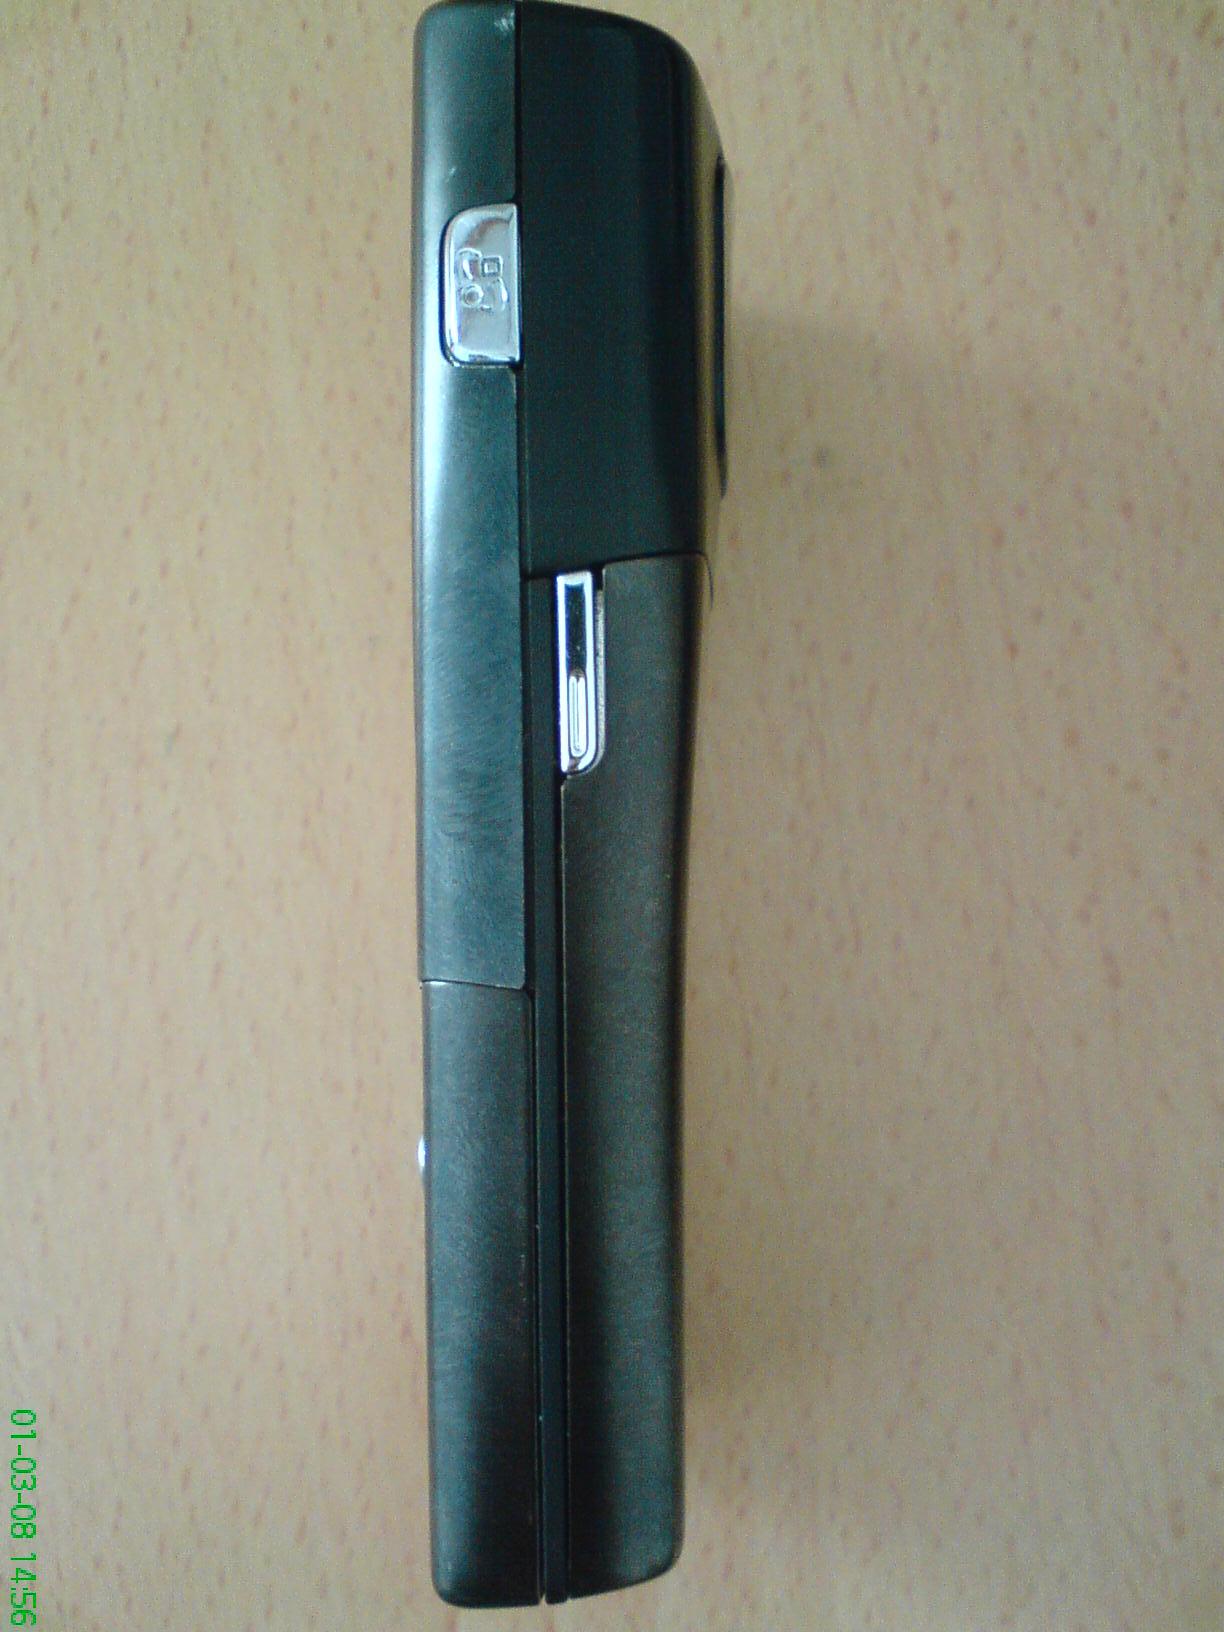  N91 8GB 430 YTL(TAKAS VAR-W810 VEYA 8800)